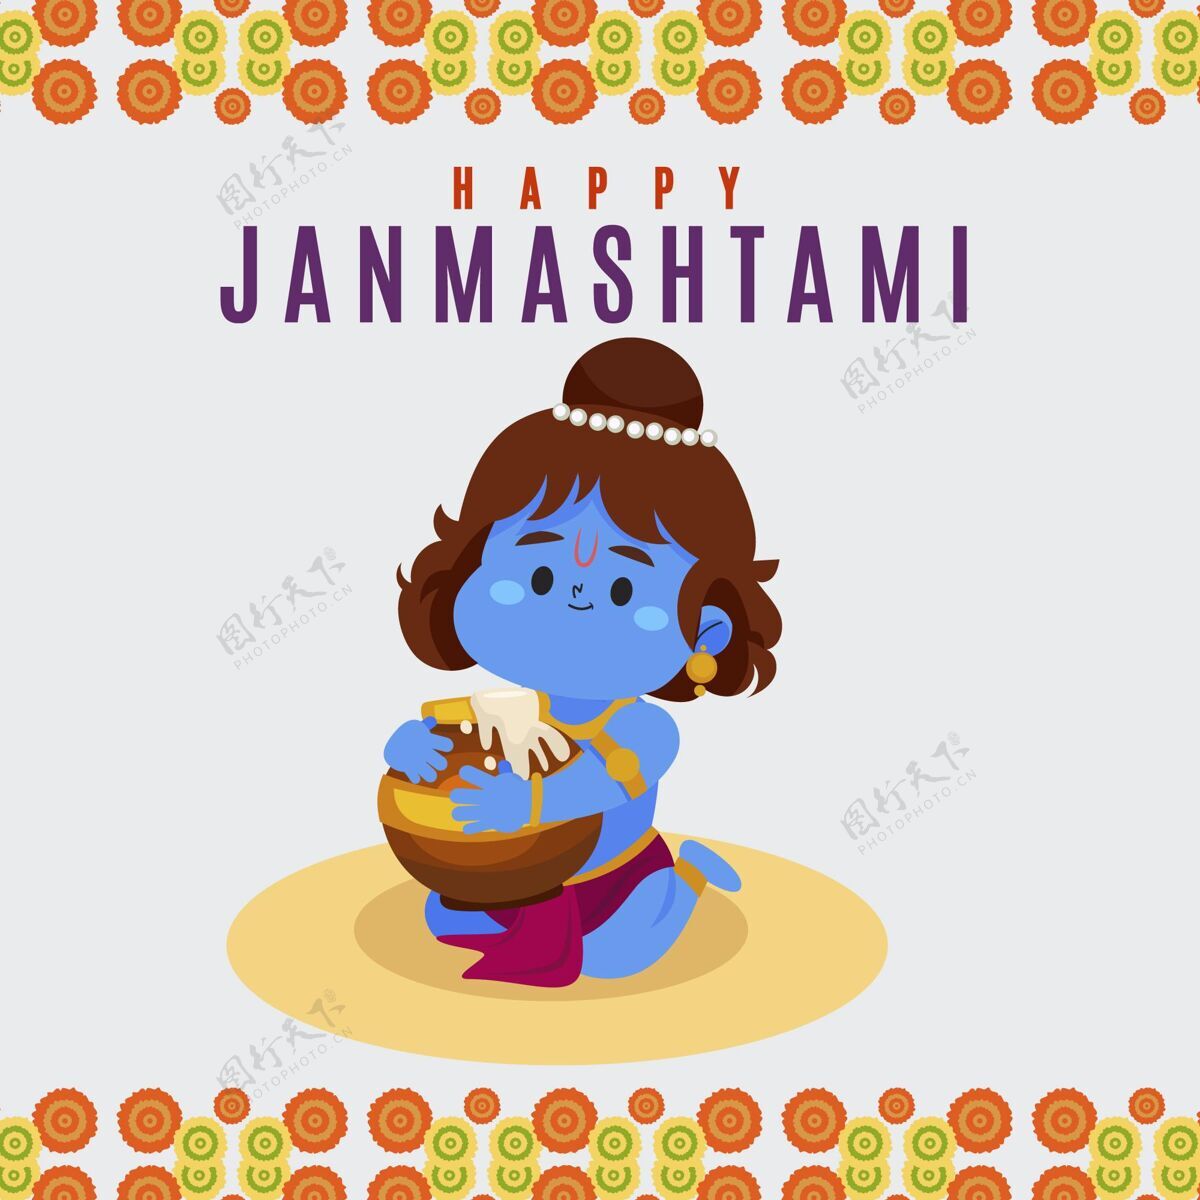 HappyJanmashtami婴儿克里希纳吃黄油的平面插图贺卡8月31日印度教节